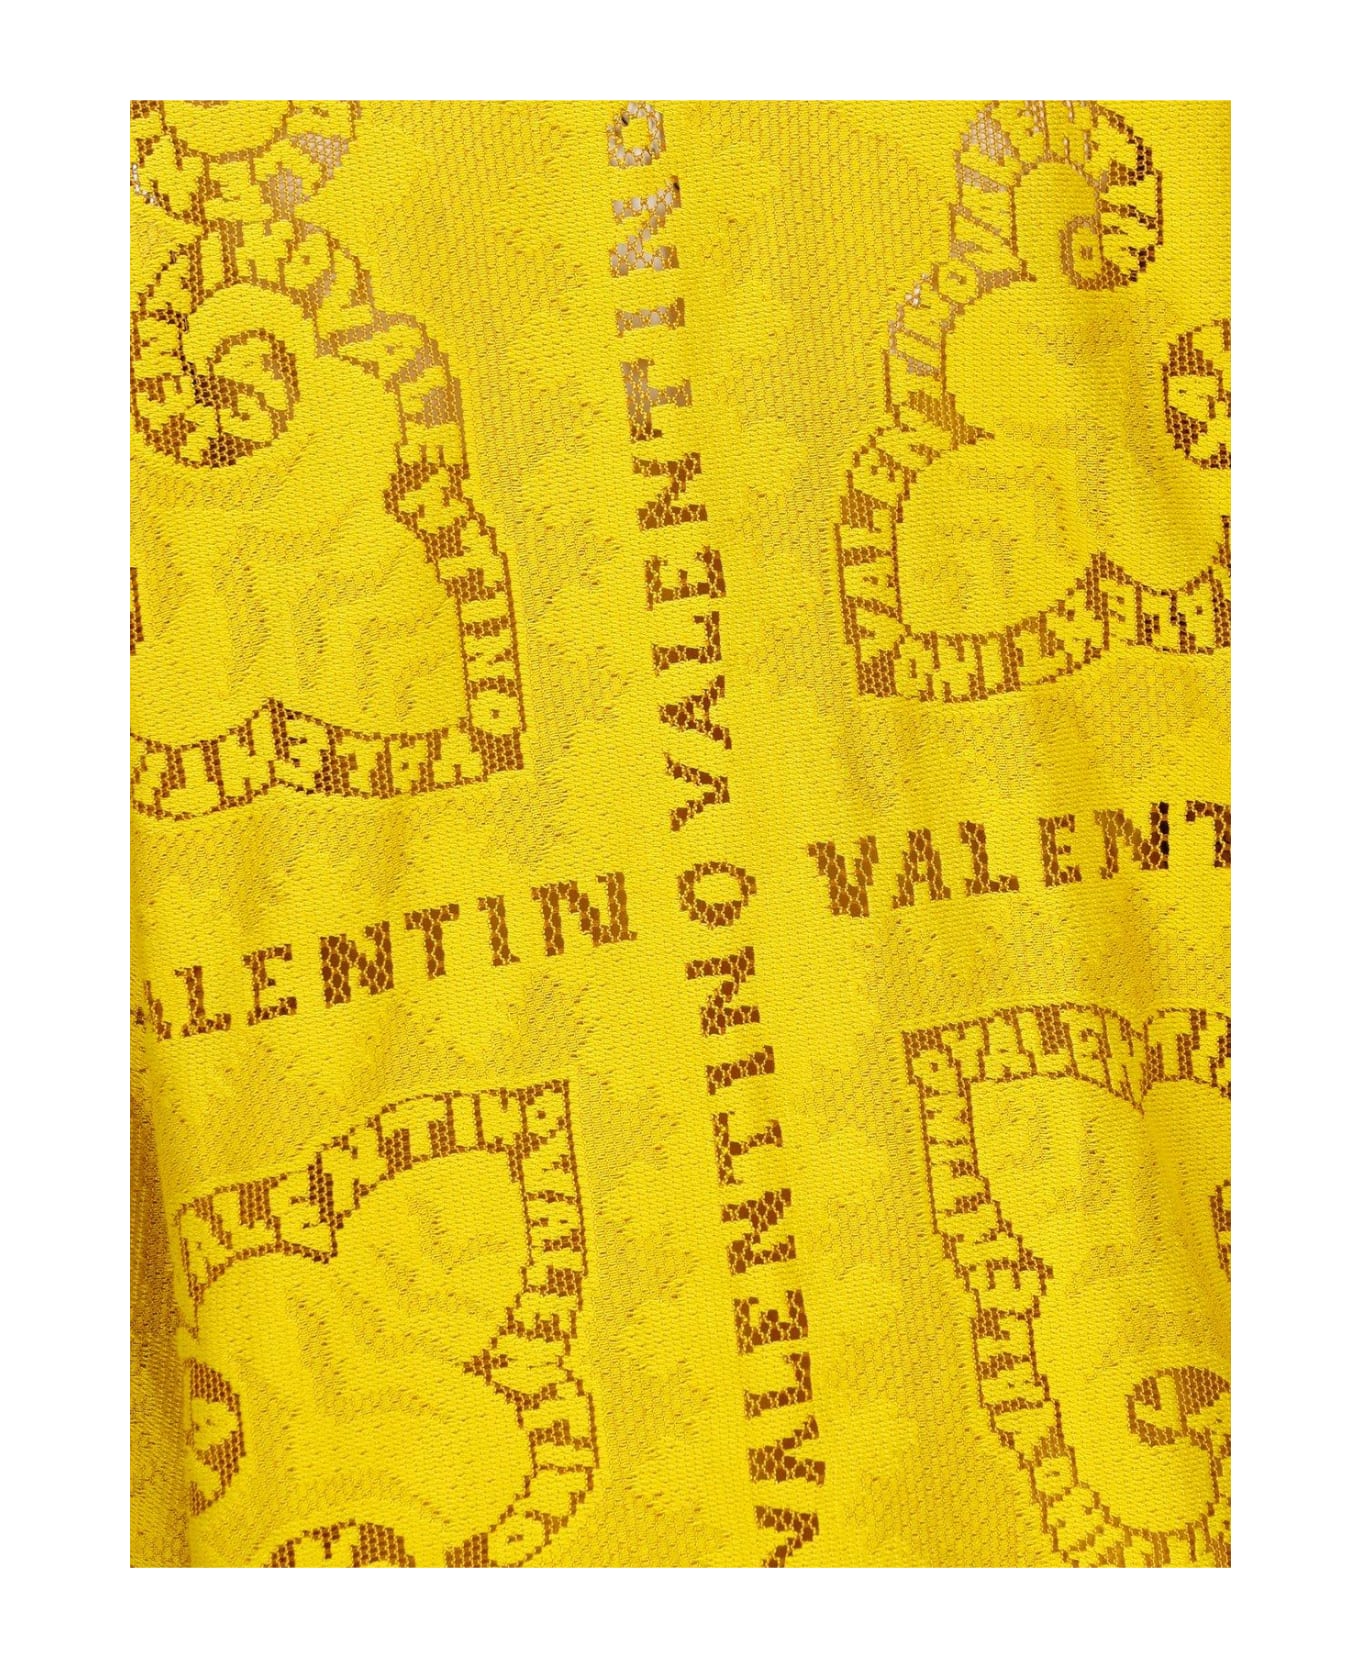 Valentino Garavani Valentino Logo Plaque V-neck Long-sleeved Dress - Yellow ワンピース＆ドレス